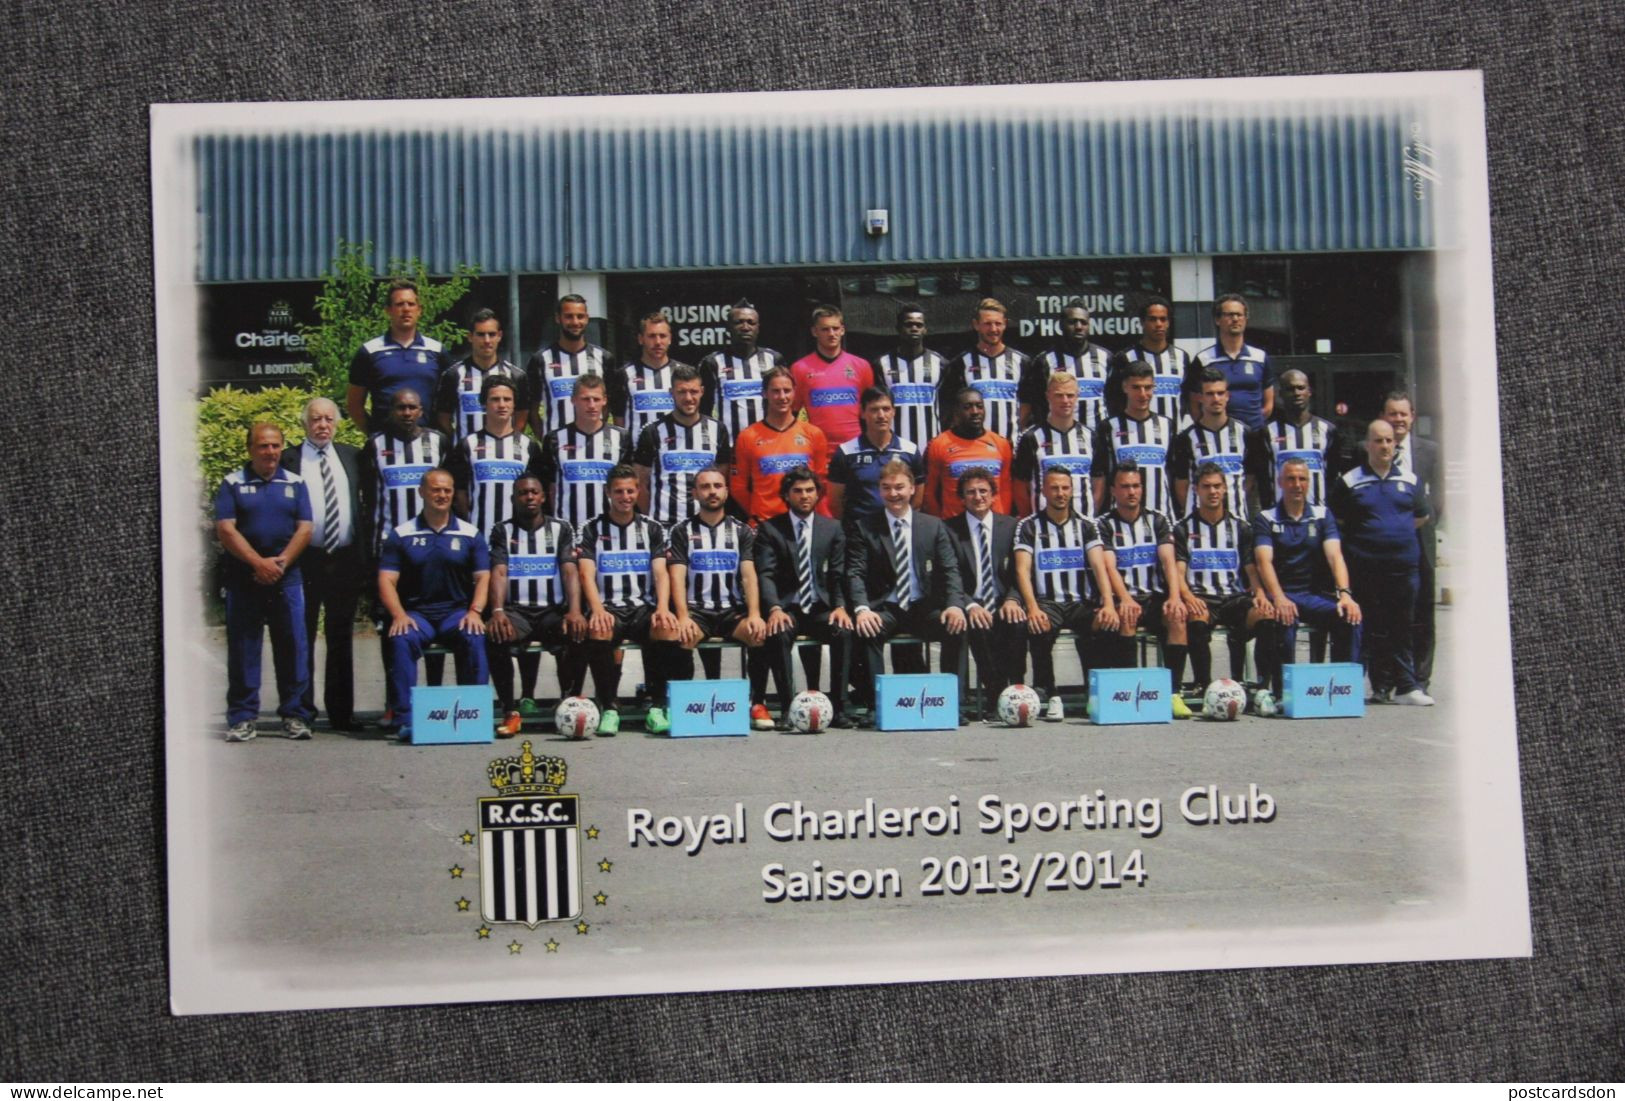 FUSSBALL-FOOTBALL-SOCCER- CALCIO, -Royal Charleroi Sporting Club -  OLD Photo Postcard Size - Calcio